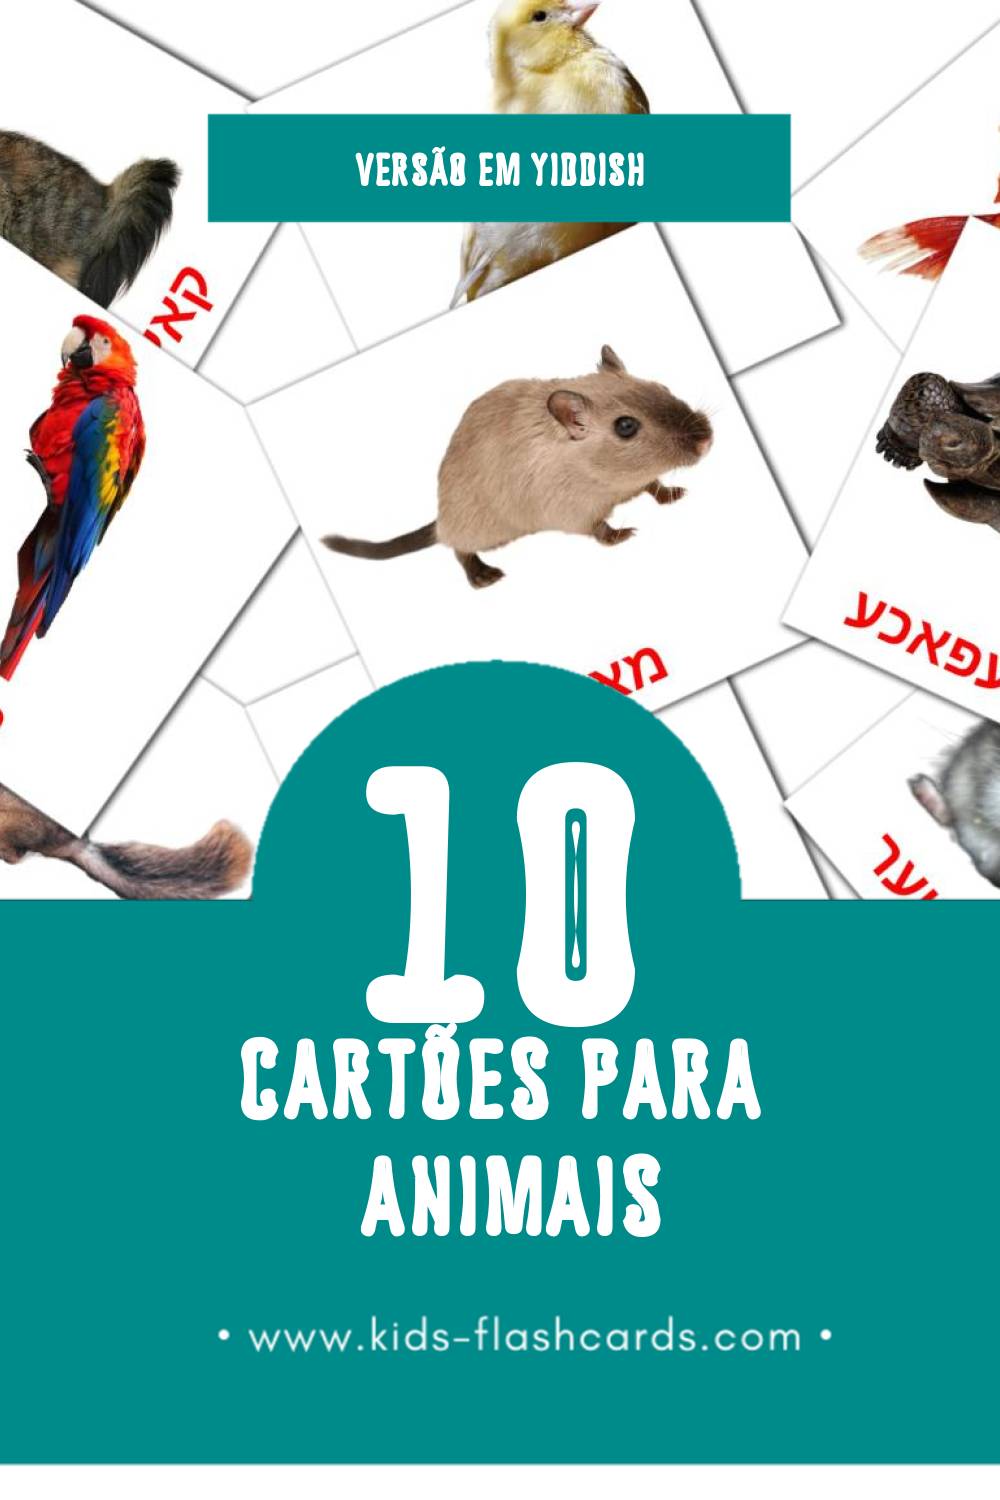 Flashcards de חיות Visuais para Toddlers (10 cartões em Yiddish)